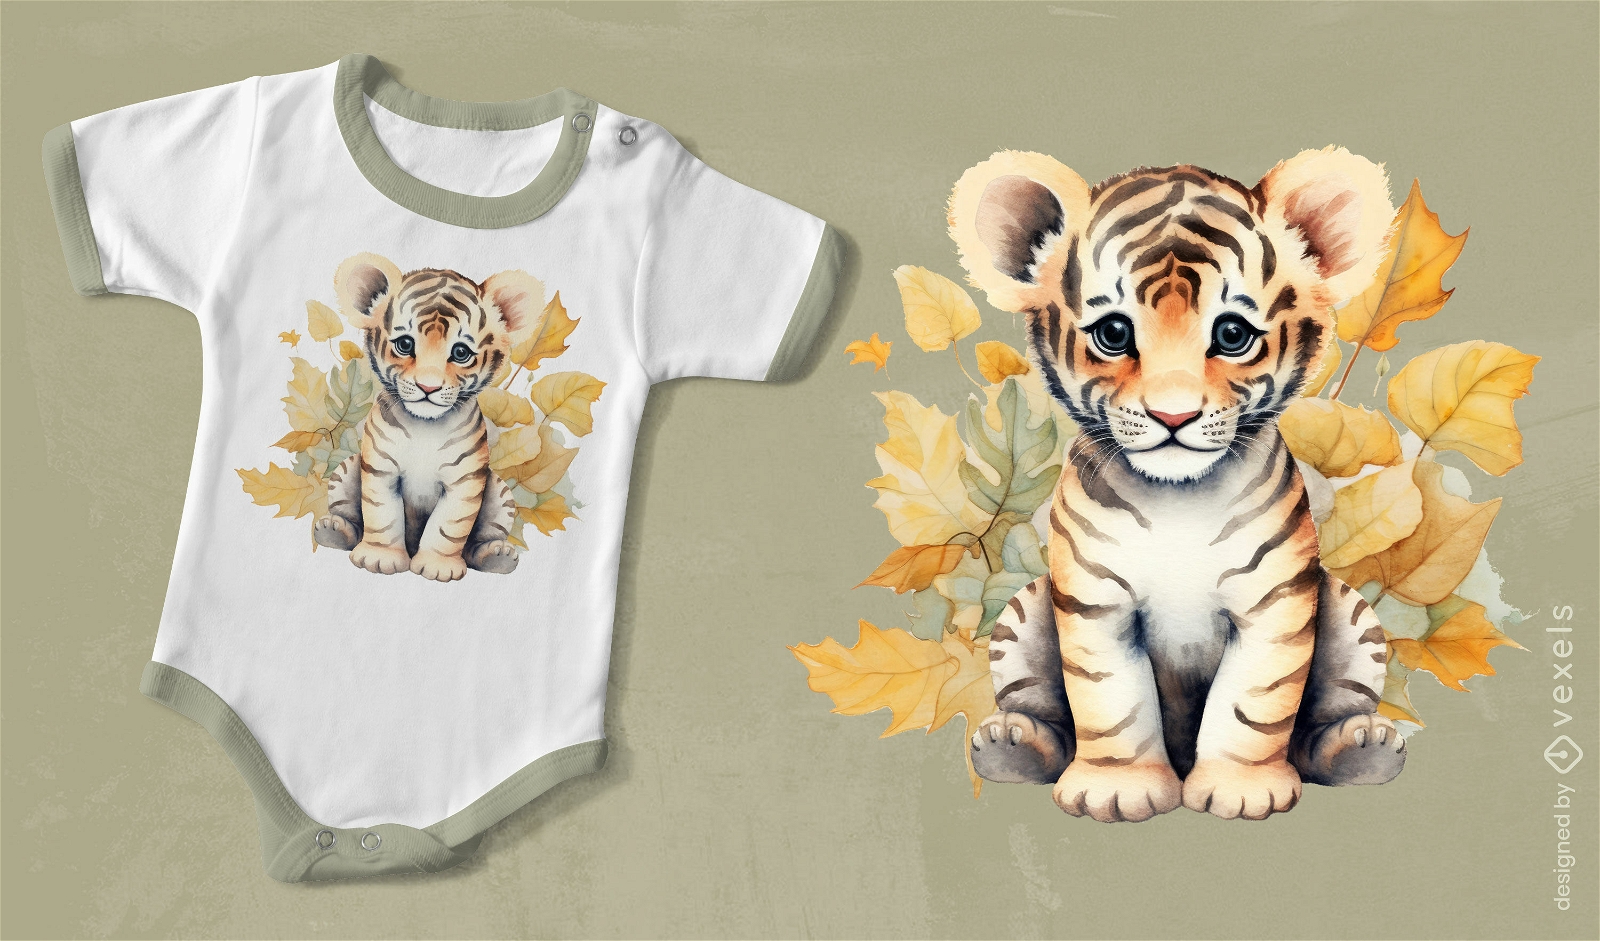 T-shirt animal filhote de tigre beb? psd